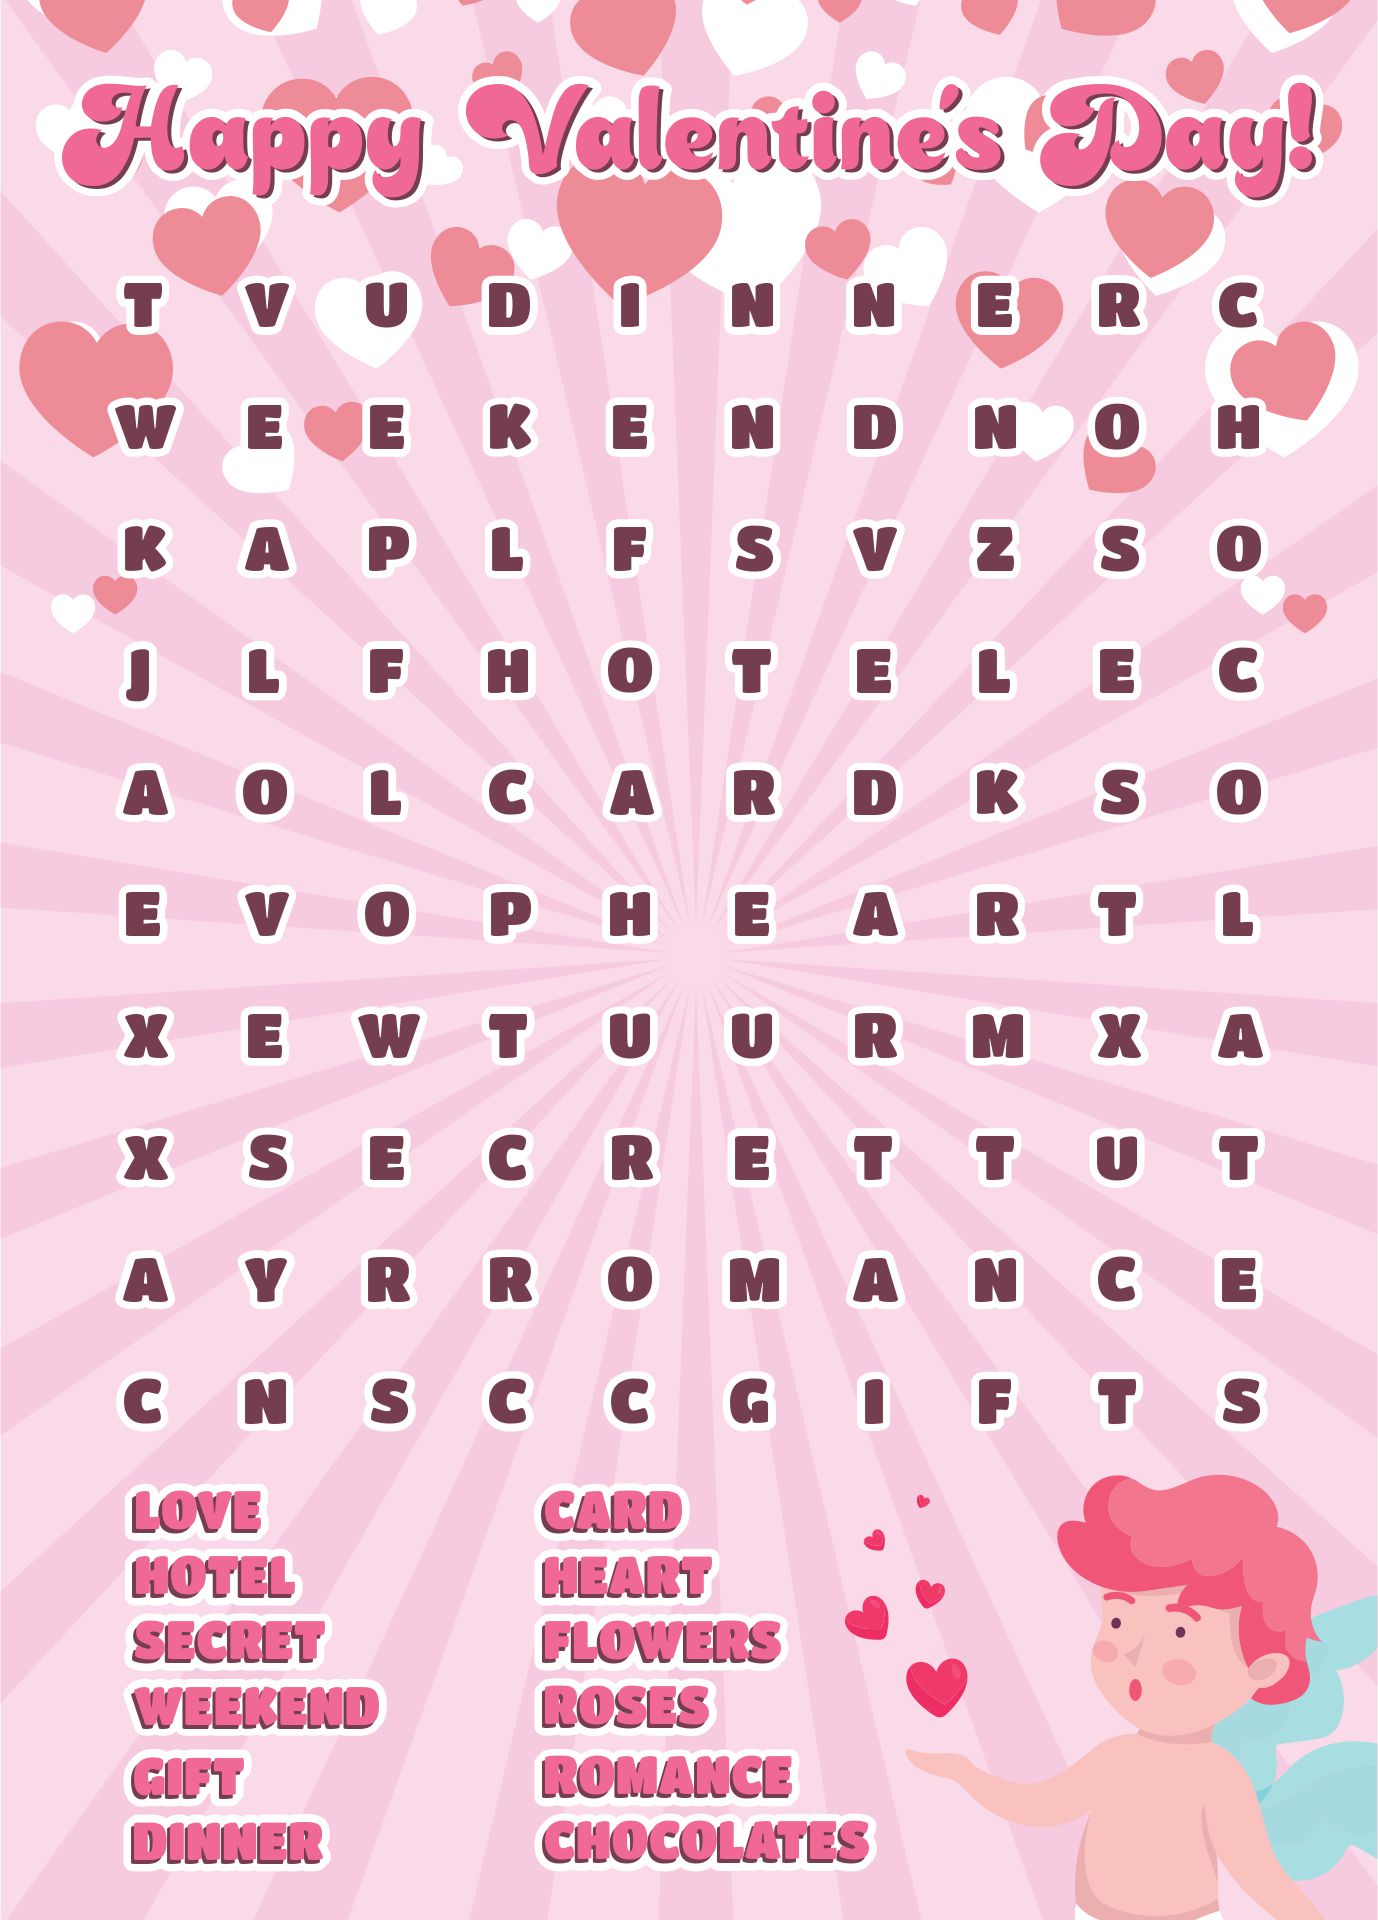 Printable Valentine Word Search